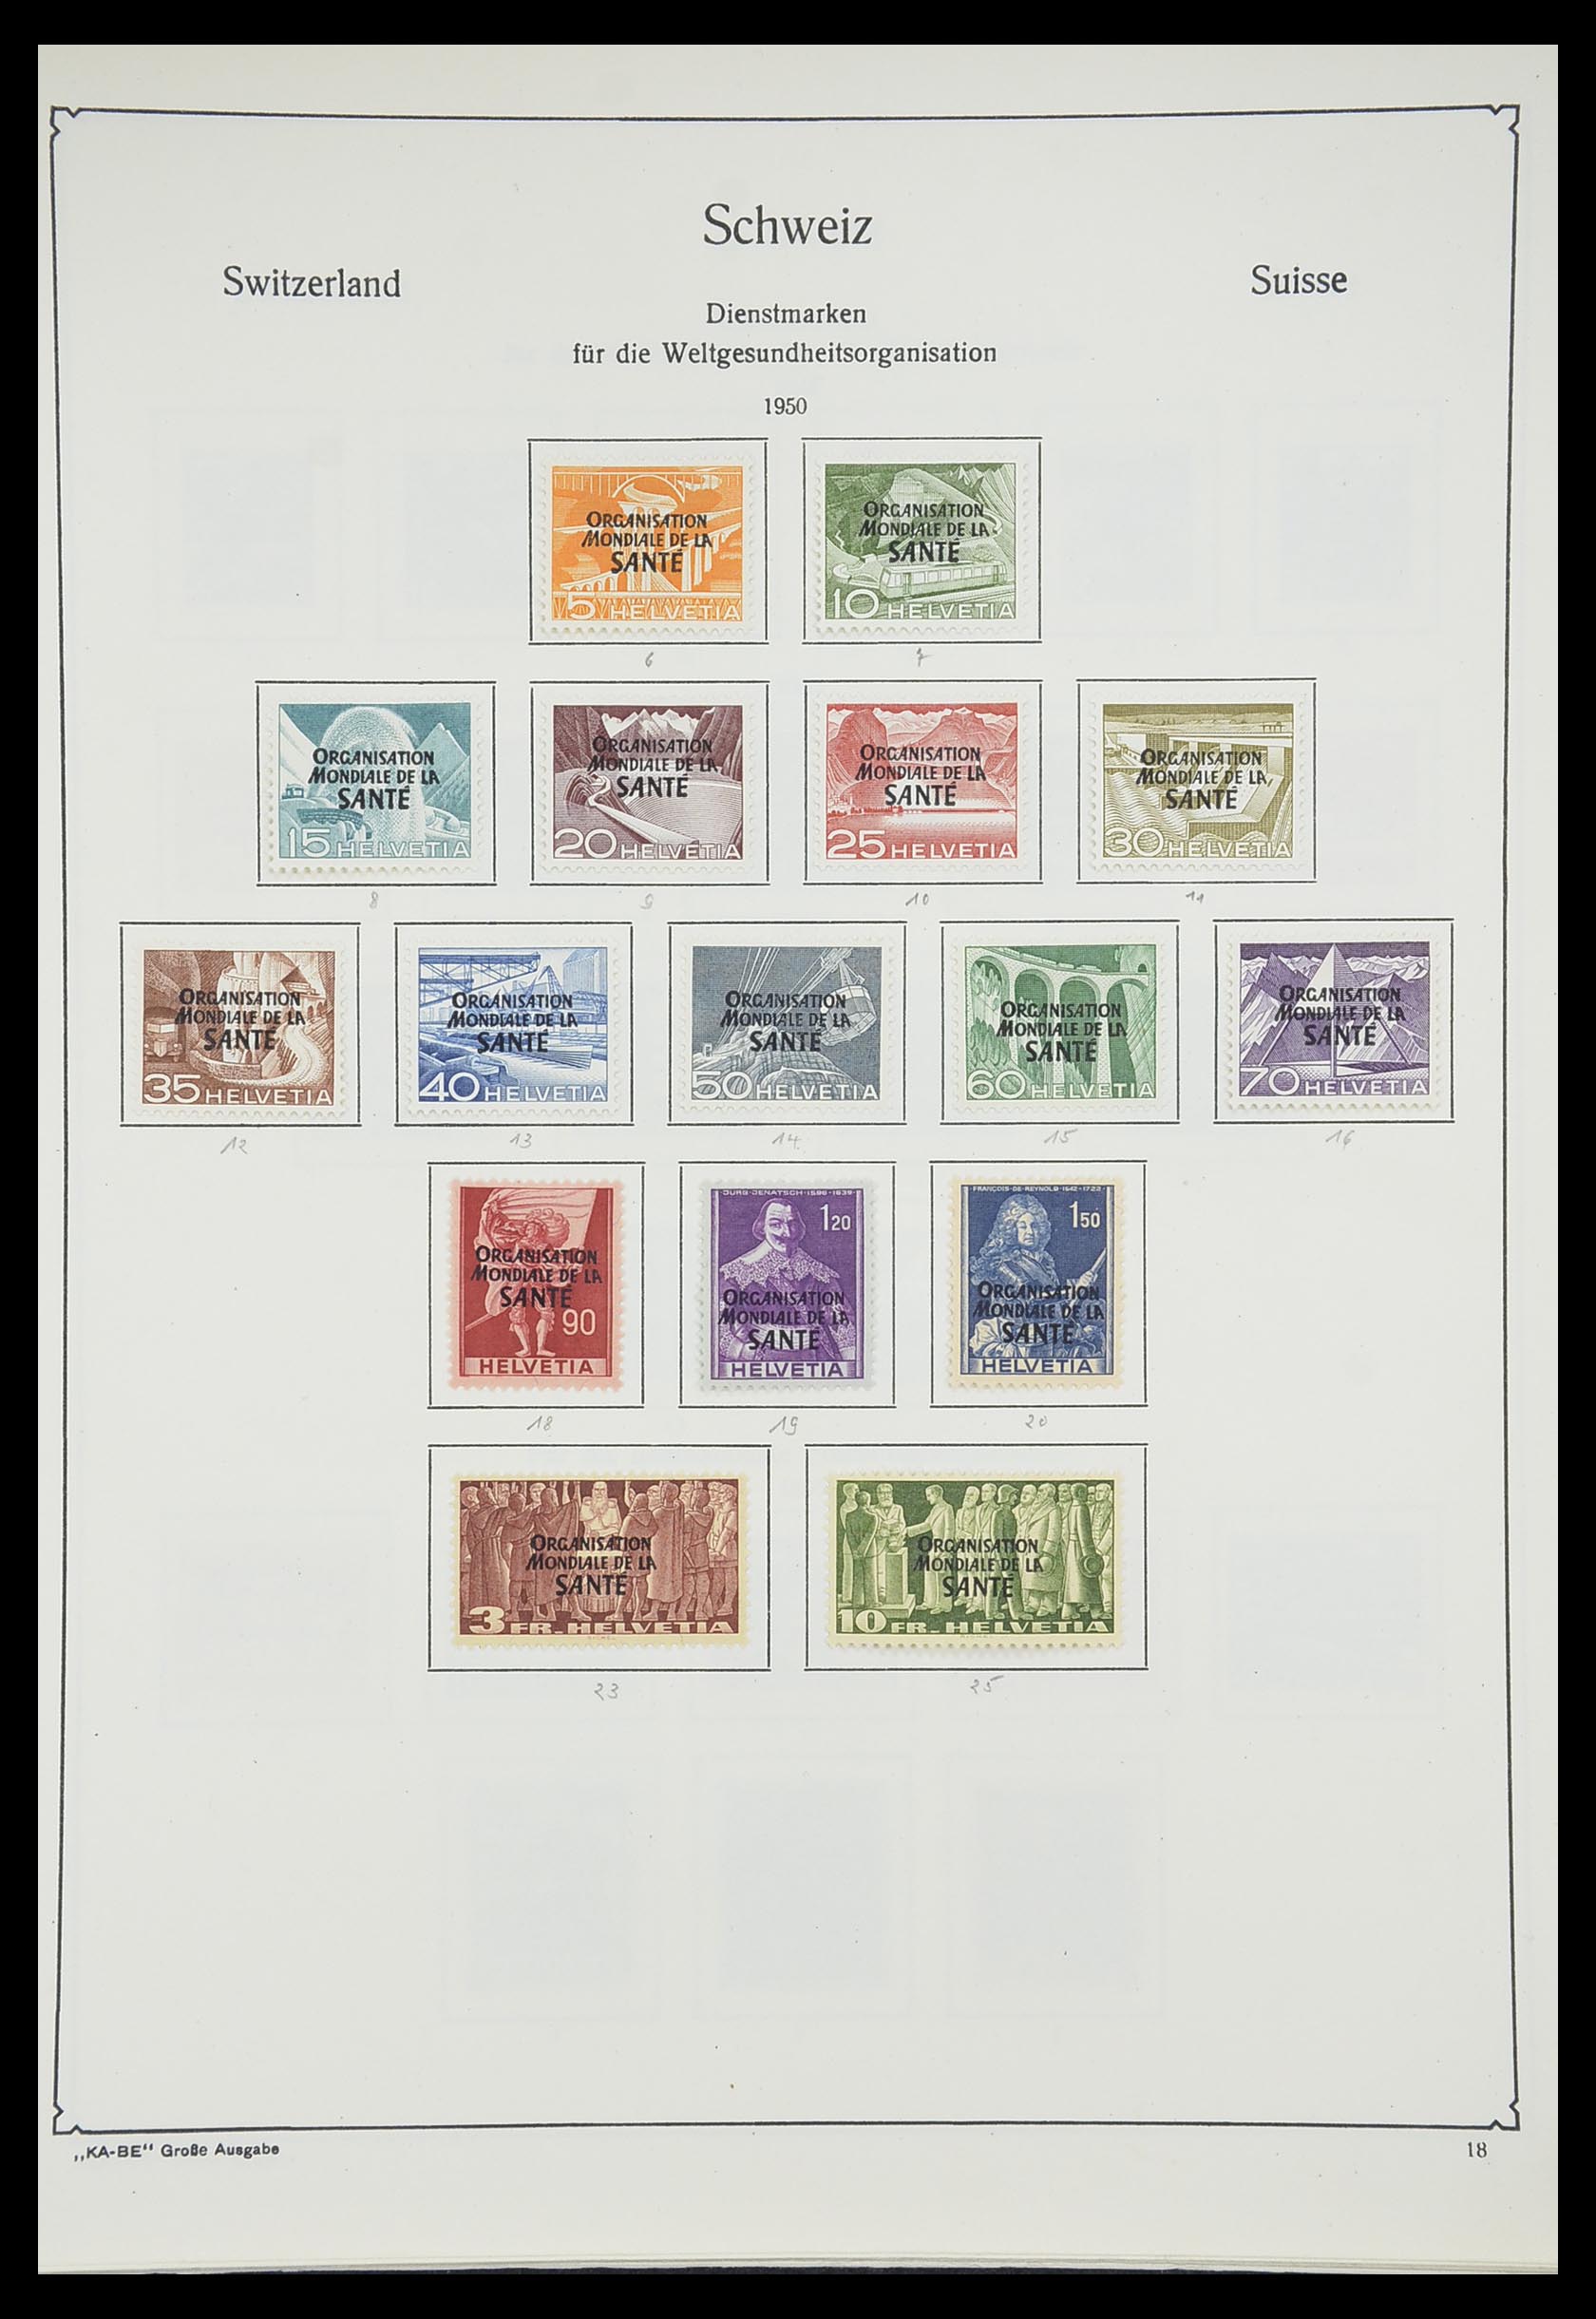 33327 019 - Stamp collection 33327 Switzerland service 1922-1989.